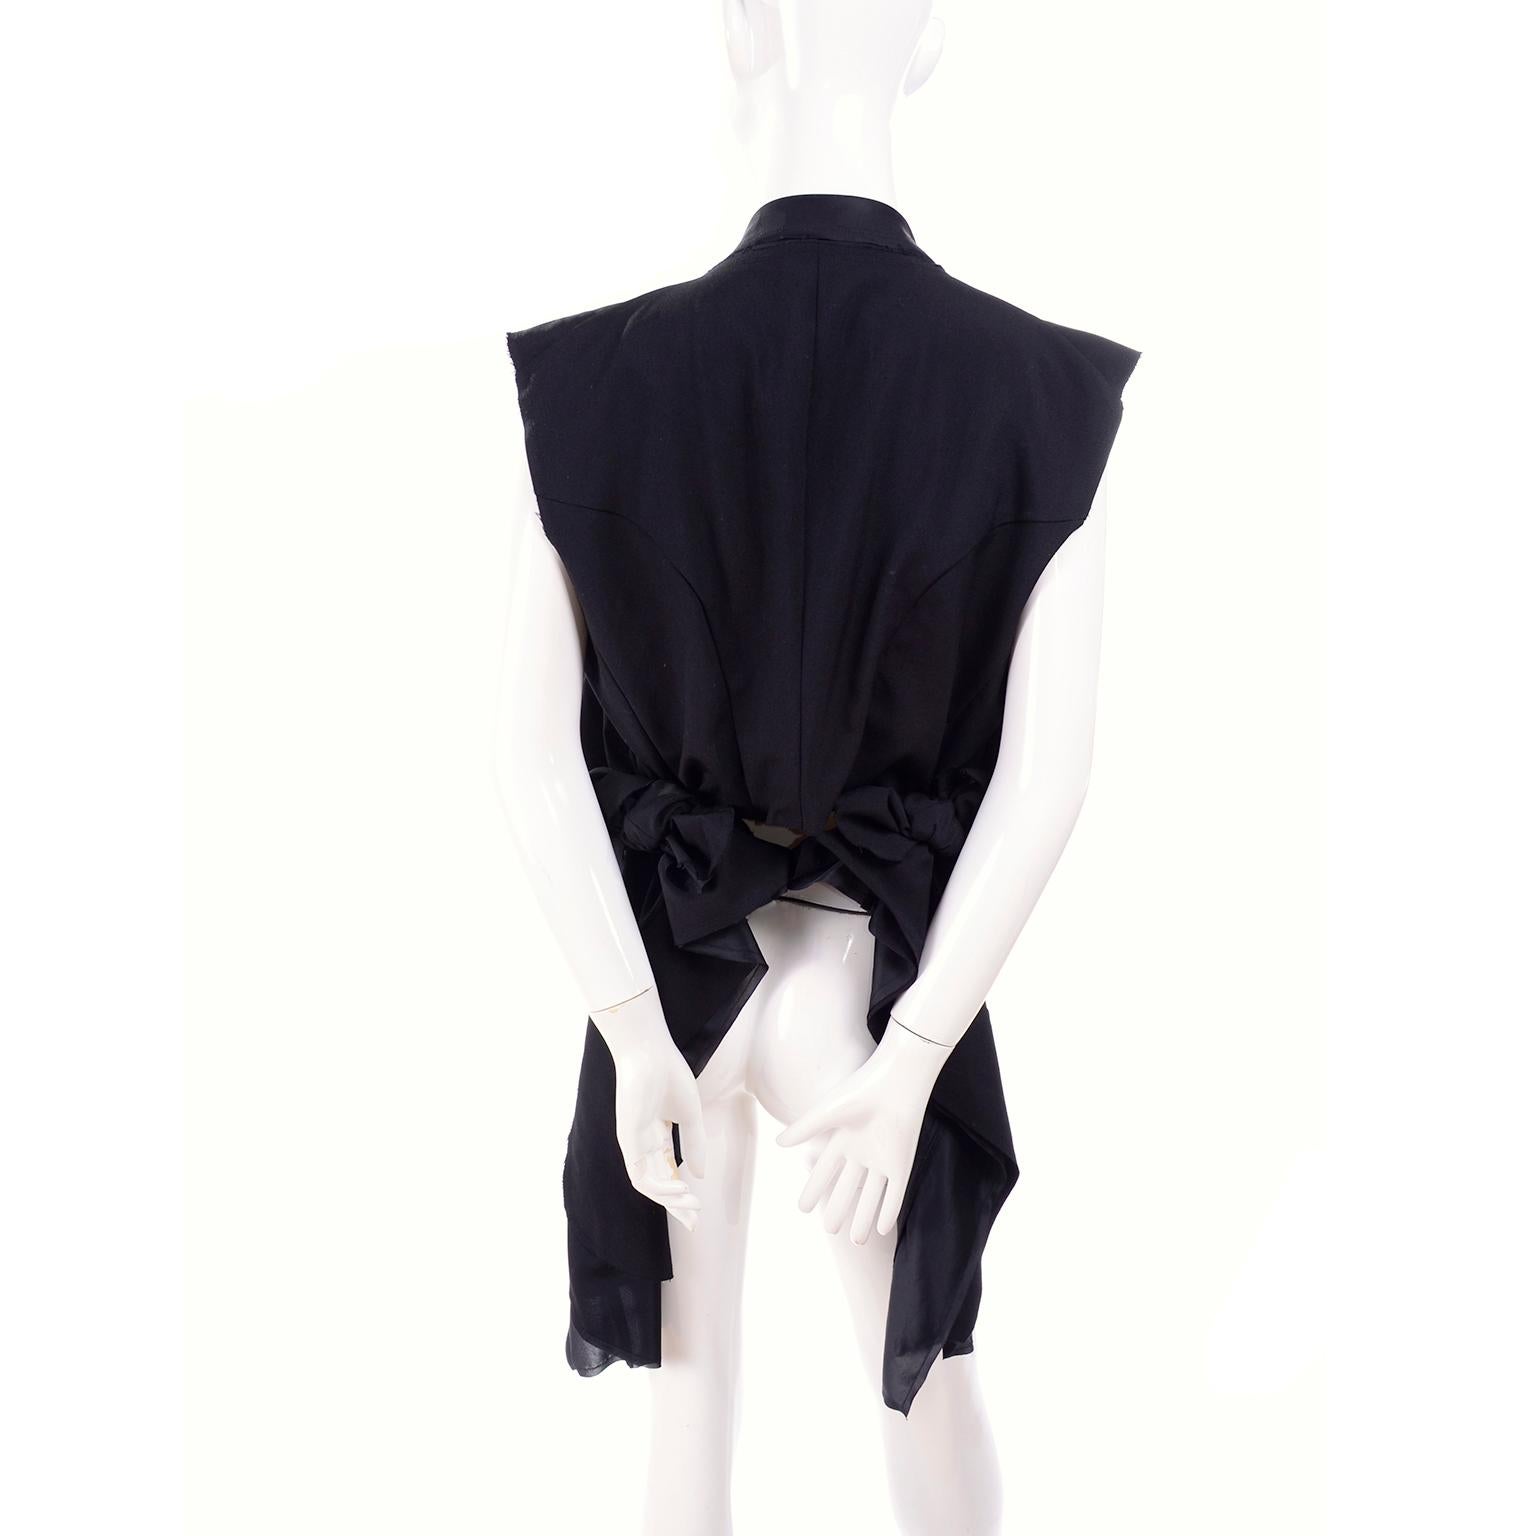 Black Wool Comme des Garcons Vest / Gilet Layered & Deconstructed w/ Raw Edges 2